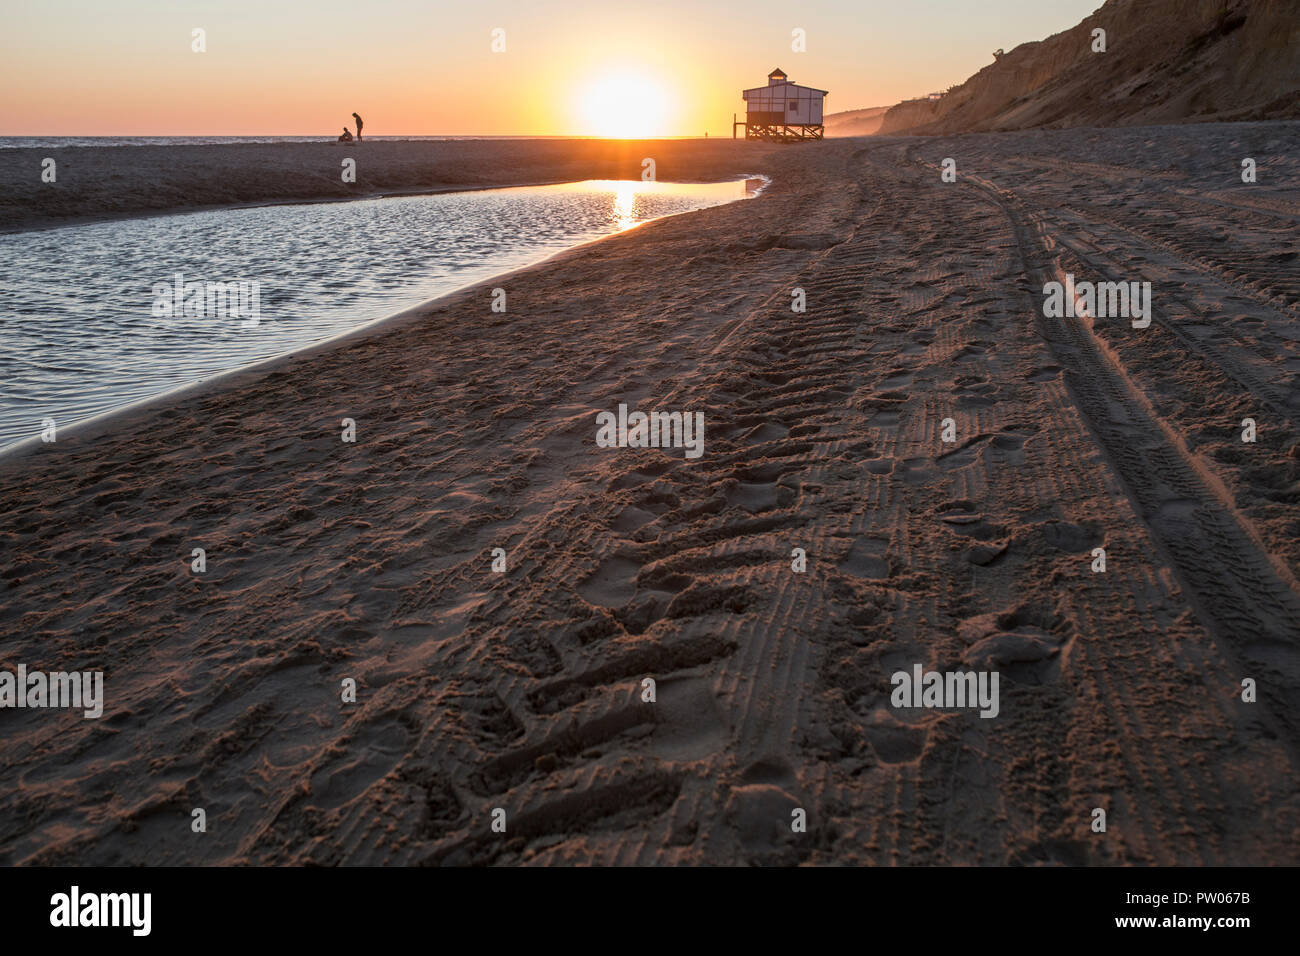 Letzte Schwimmer in der Nähe Chiringuito Strand bei Sonnenuntergang, Costa de la Luz Küste, Matalascañas, Huelva. Sonnenuntergang Stockfoto